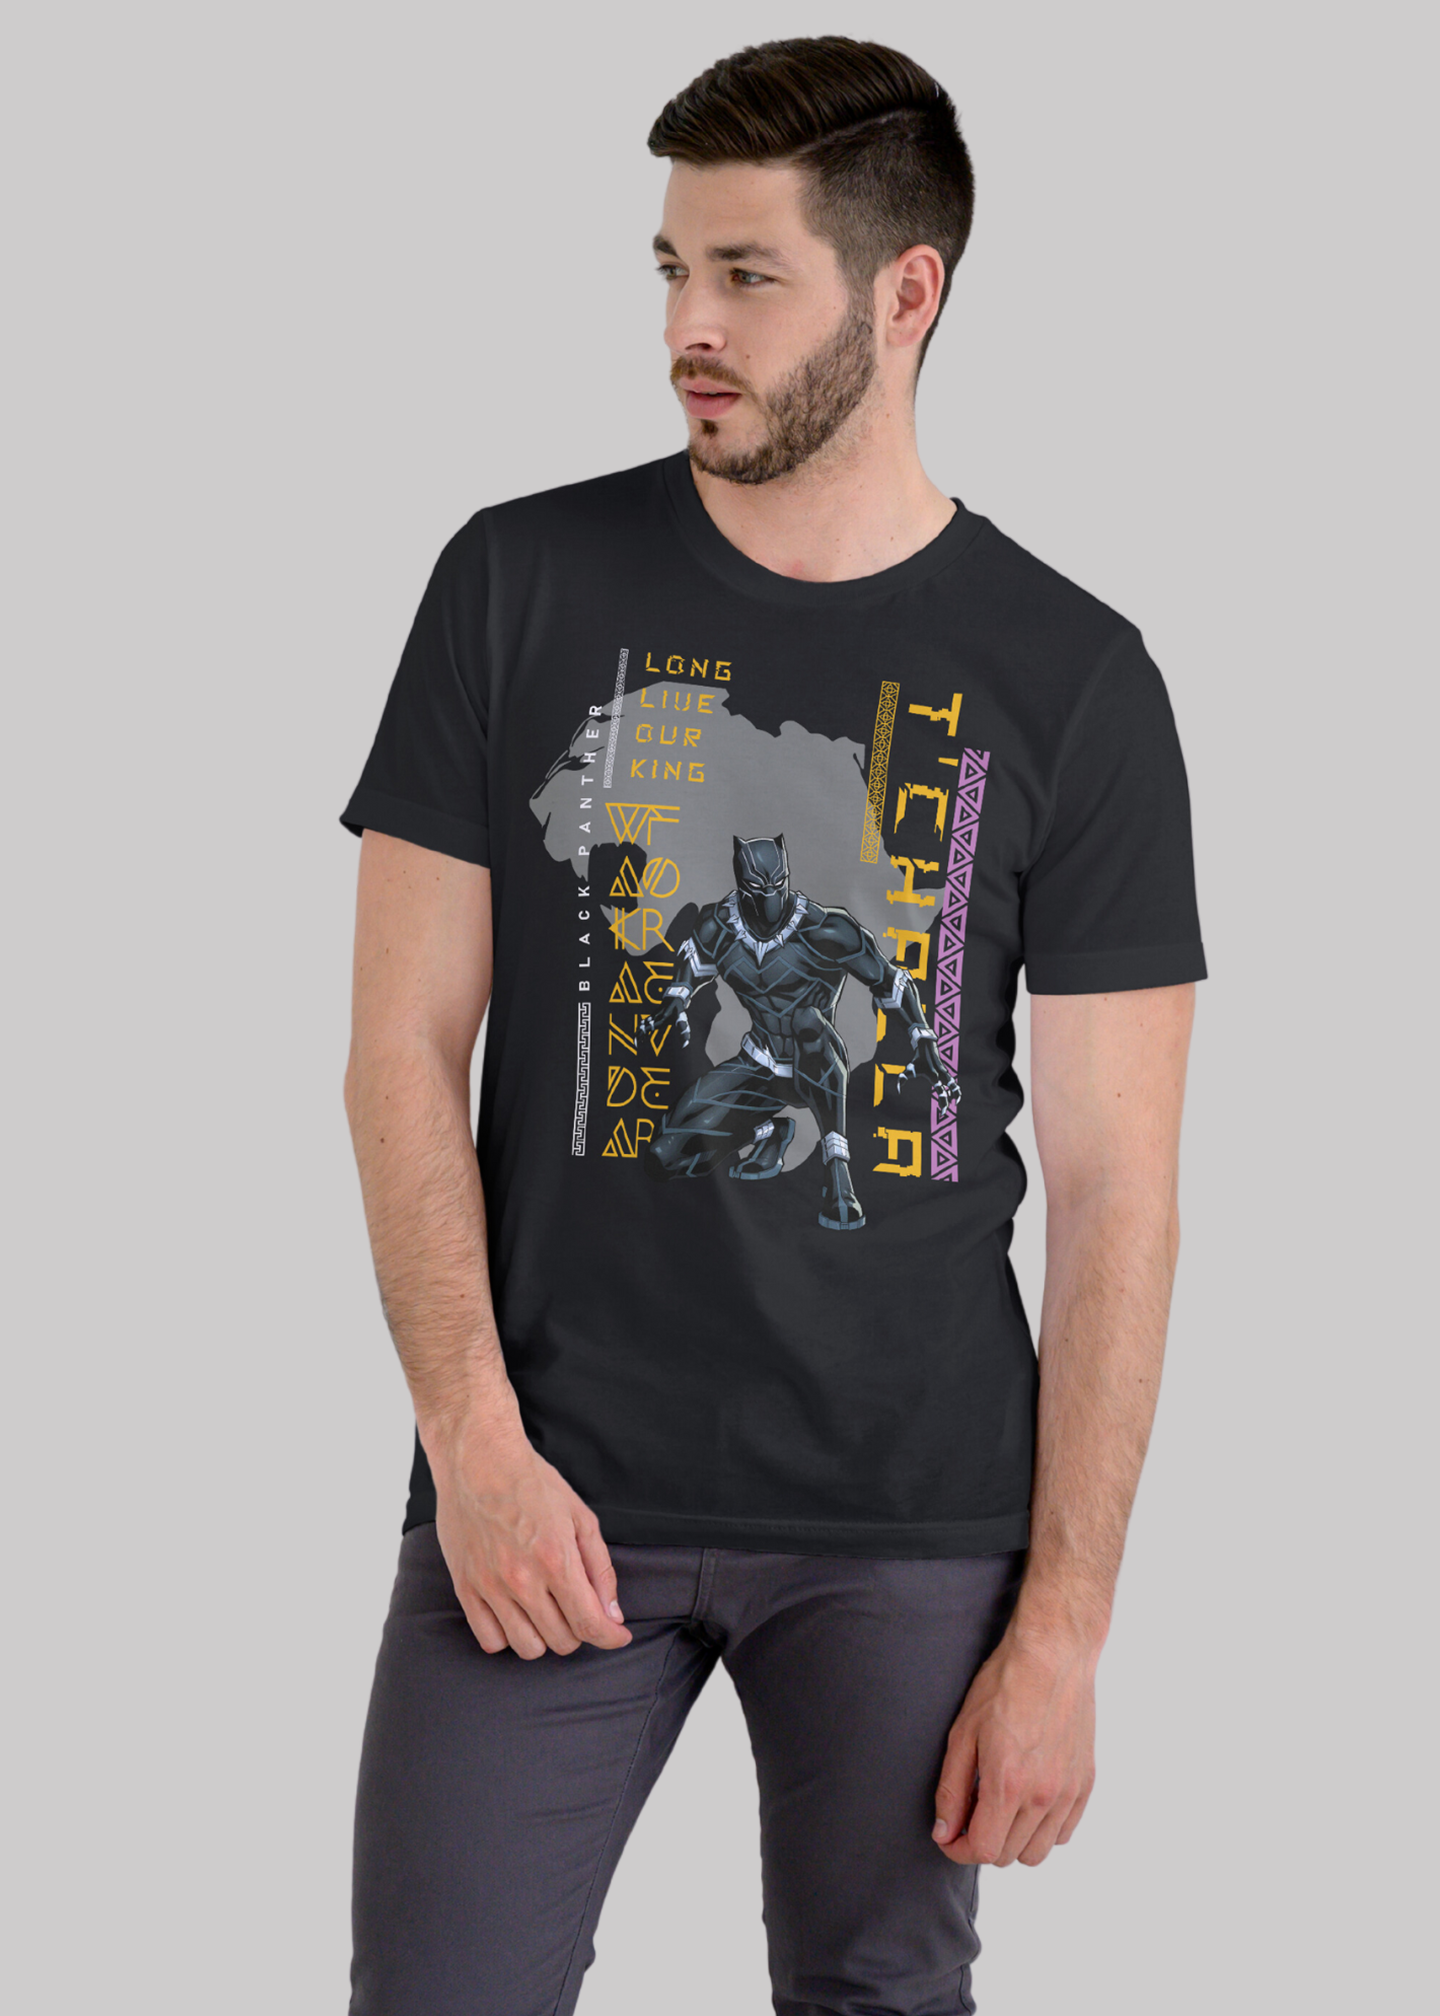 Black panther Printed Half Sleeve Premium Cotton T-shirt For Men